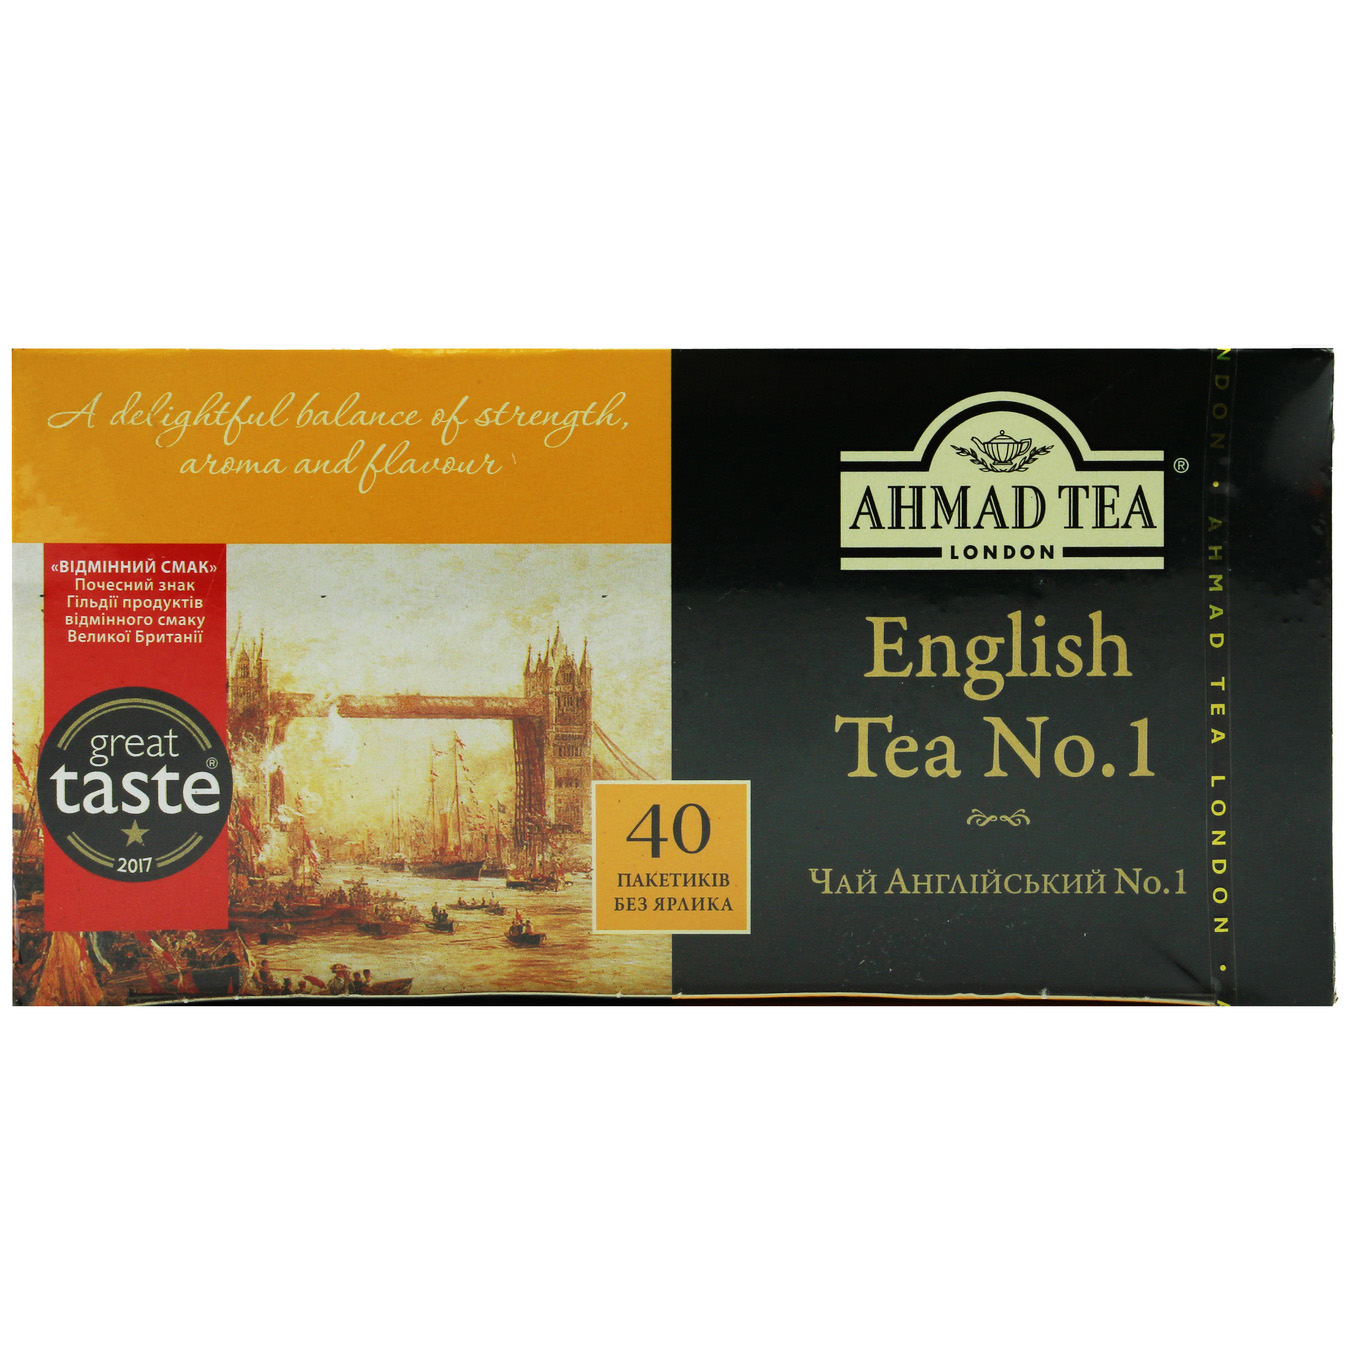 Ahmad Tea English #1 Black Tea in tea bags 40pcs 2g